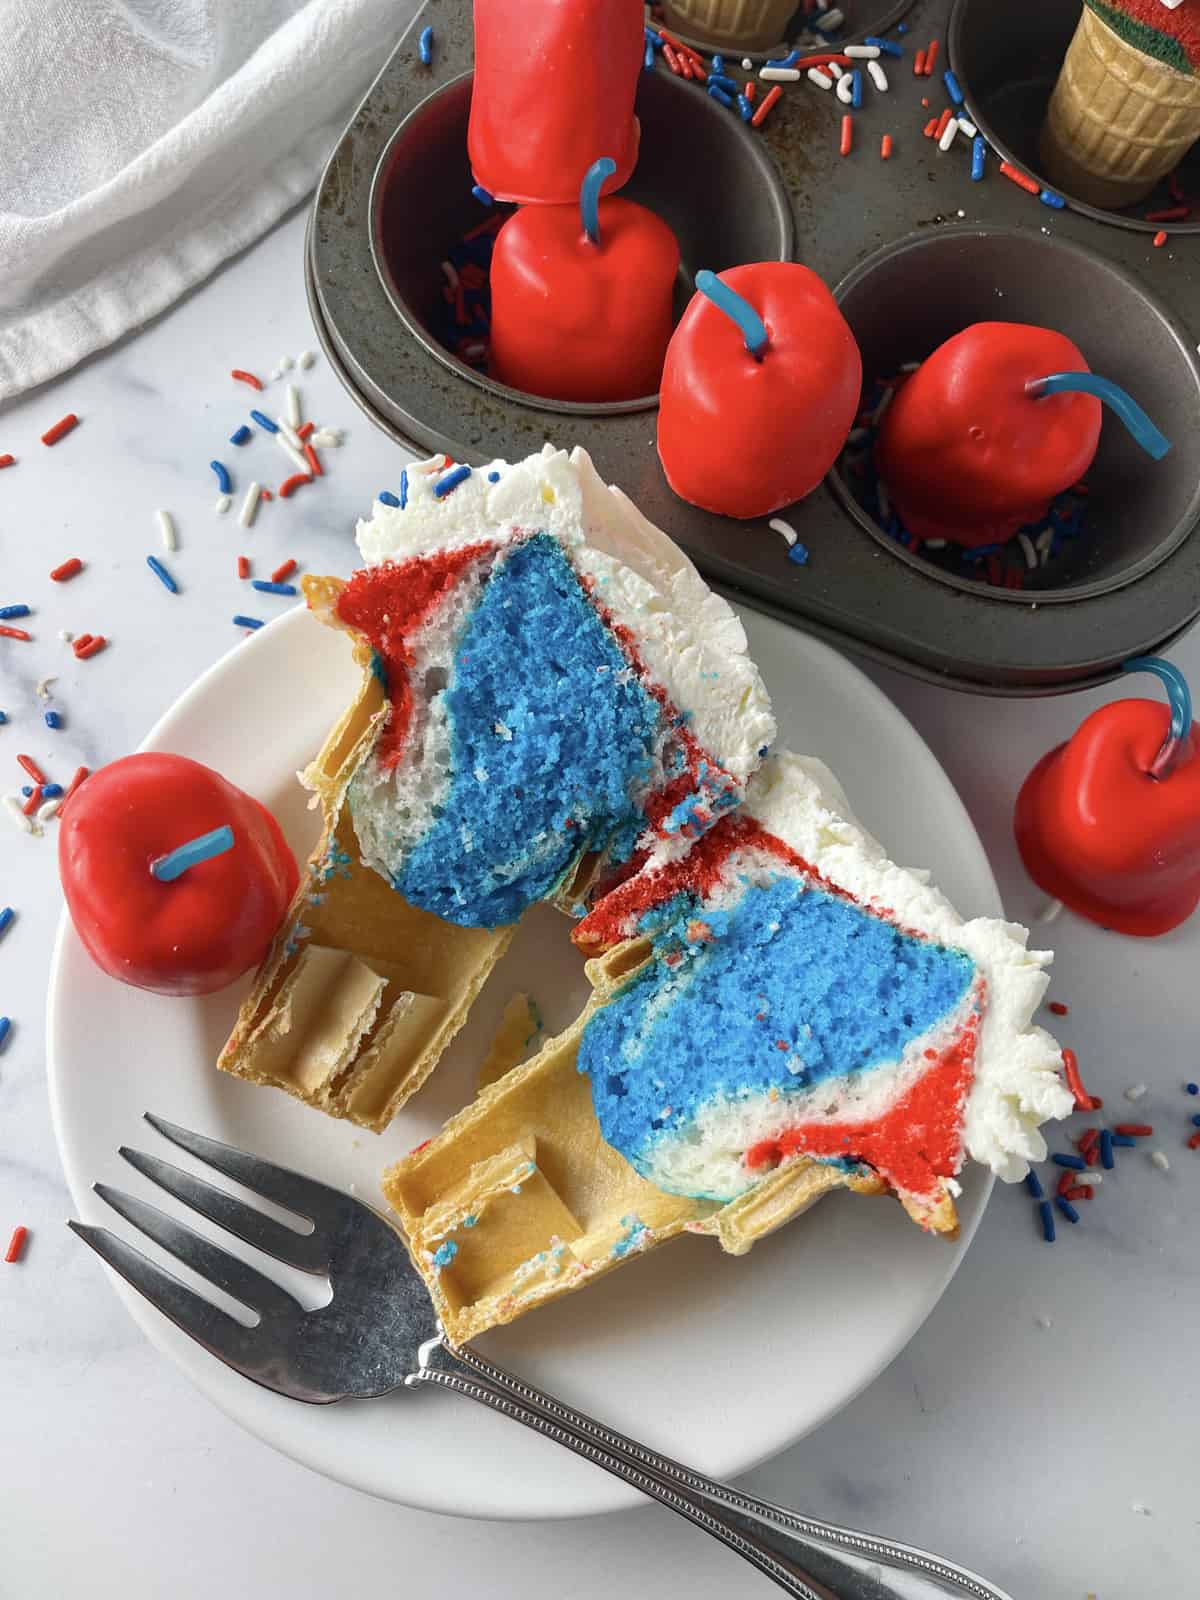 Red, white and blue swirl cake inside Firecracker cupcakes.